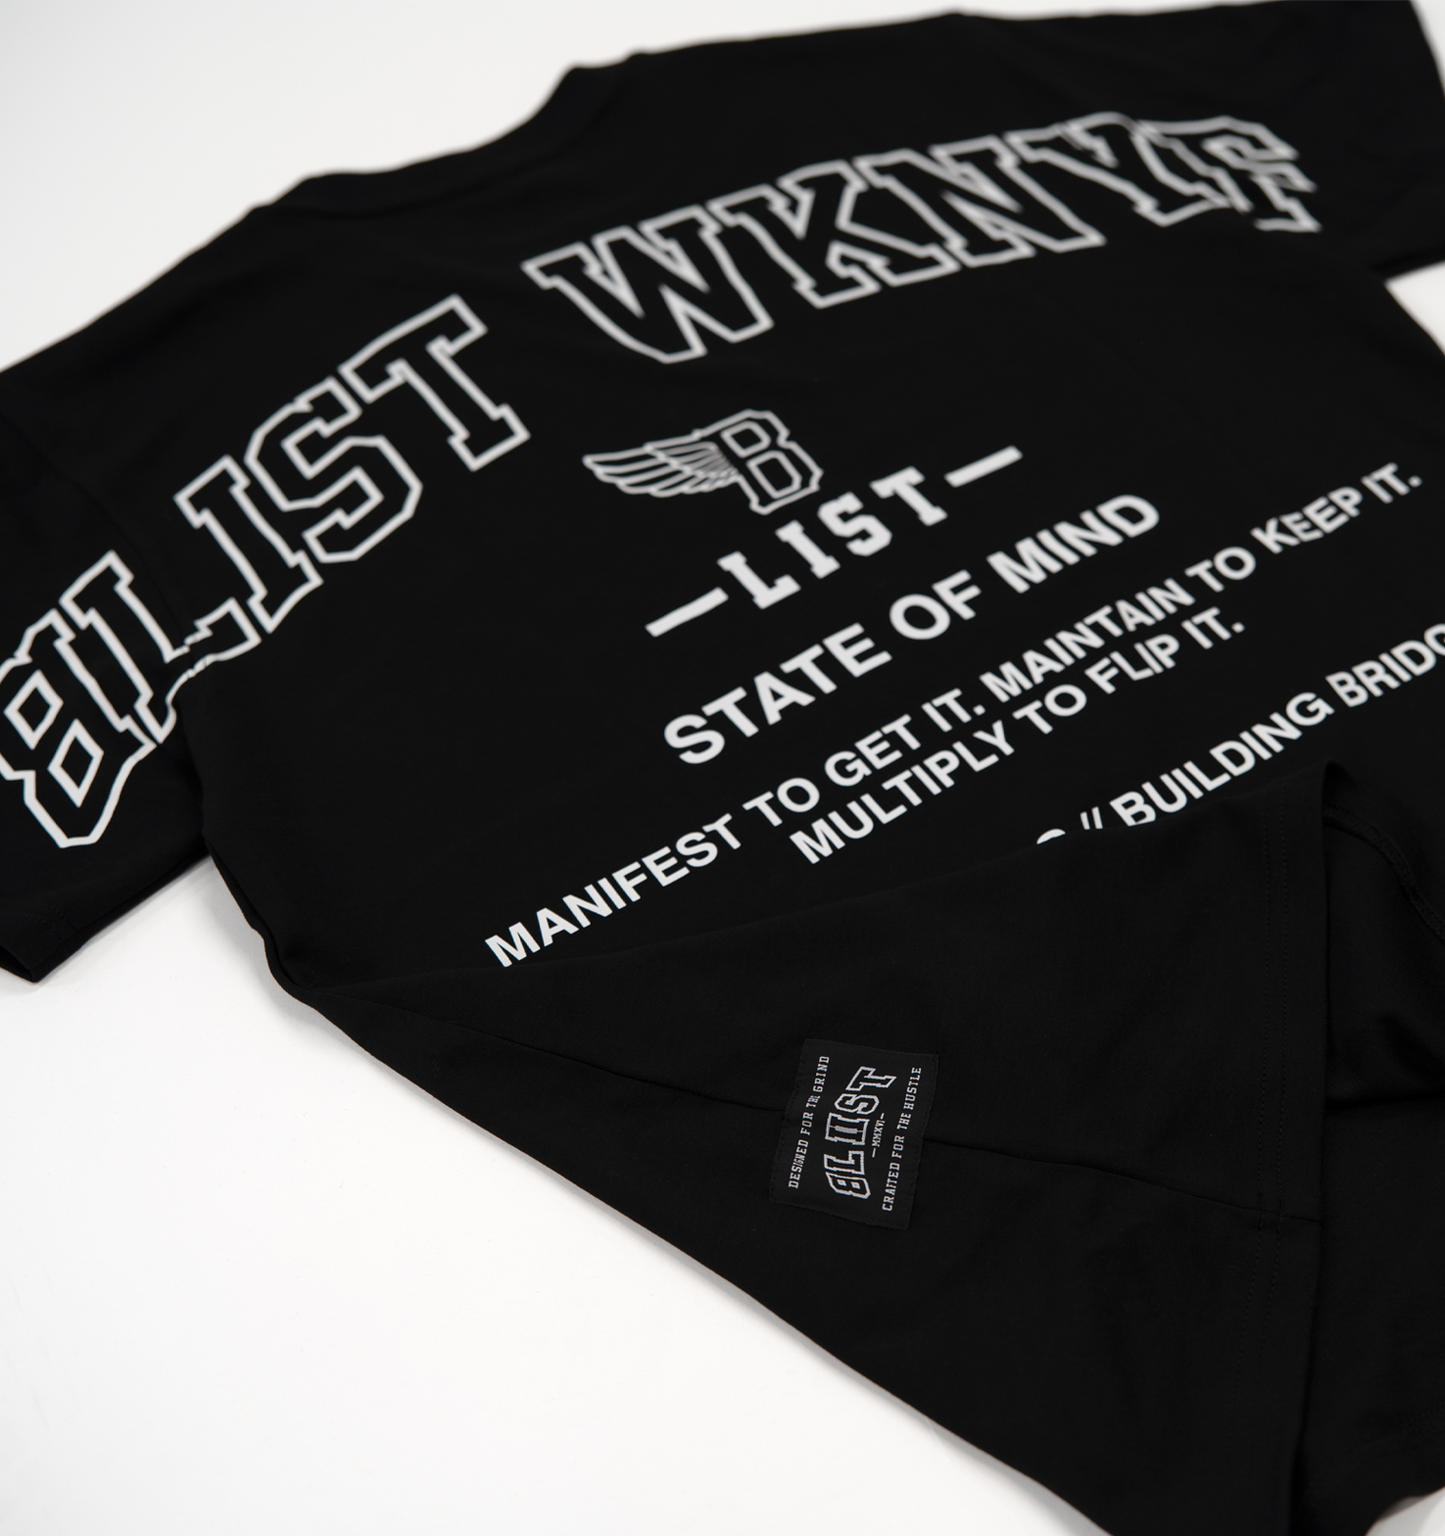 STATE OF MIND - BLACK T-Shirt